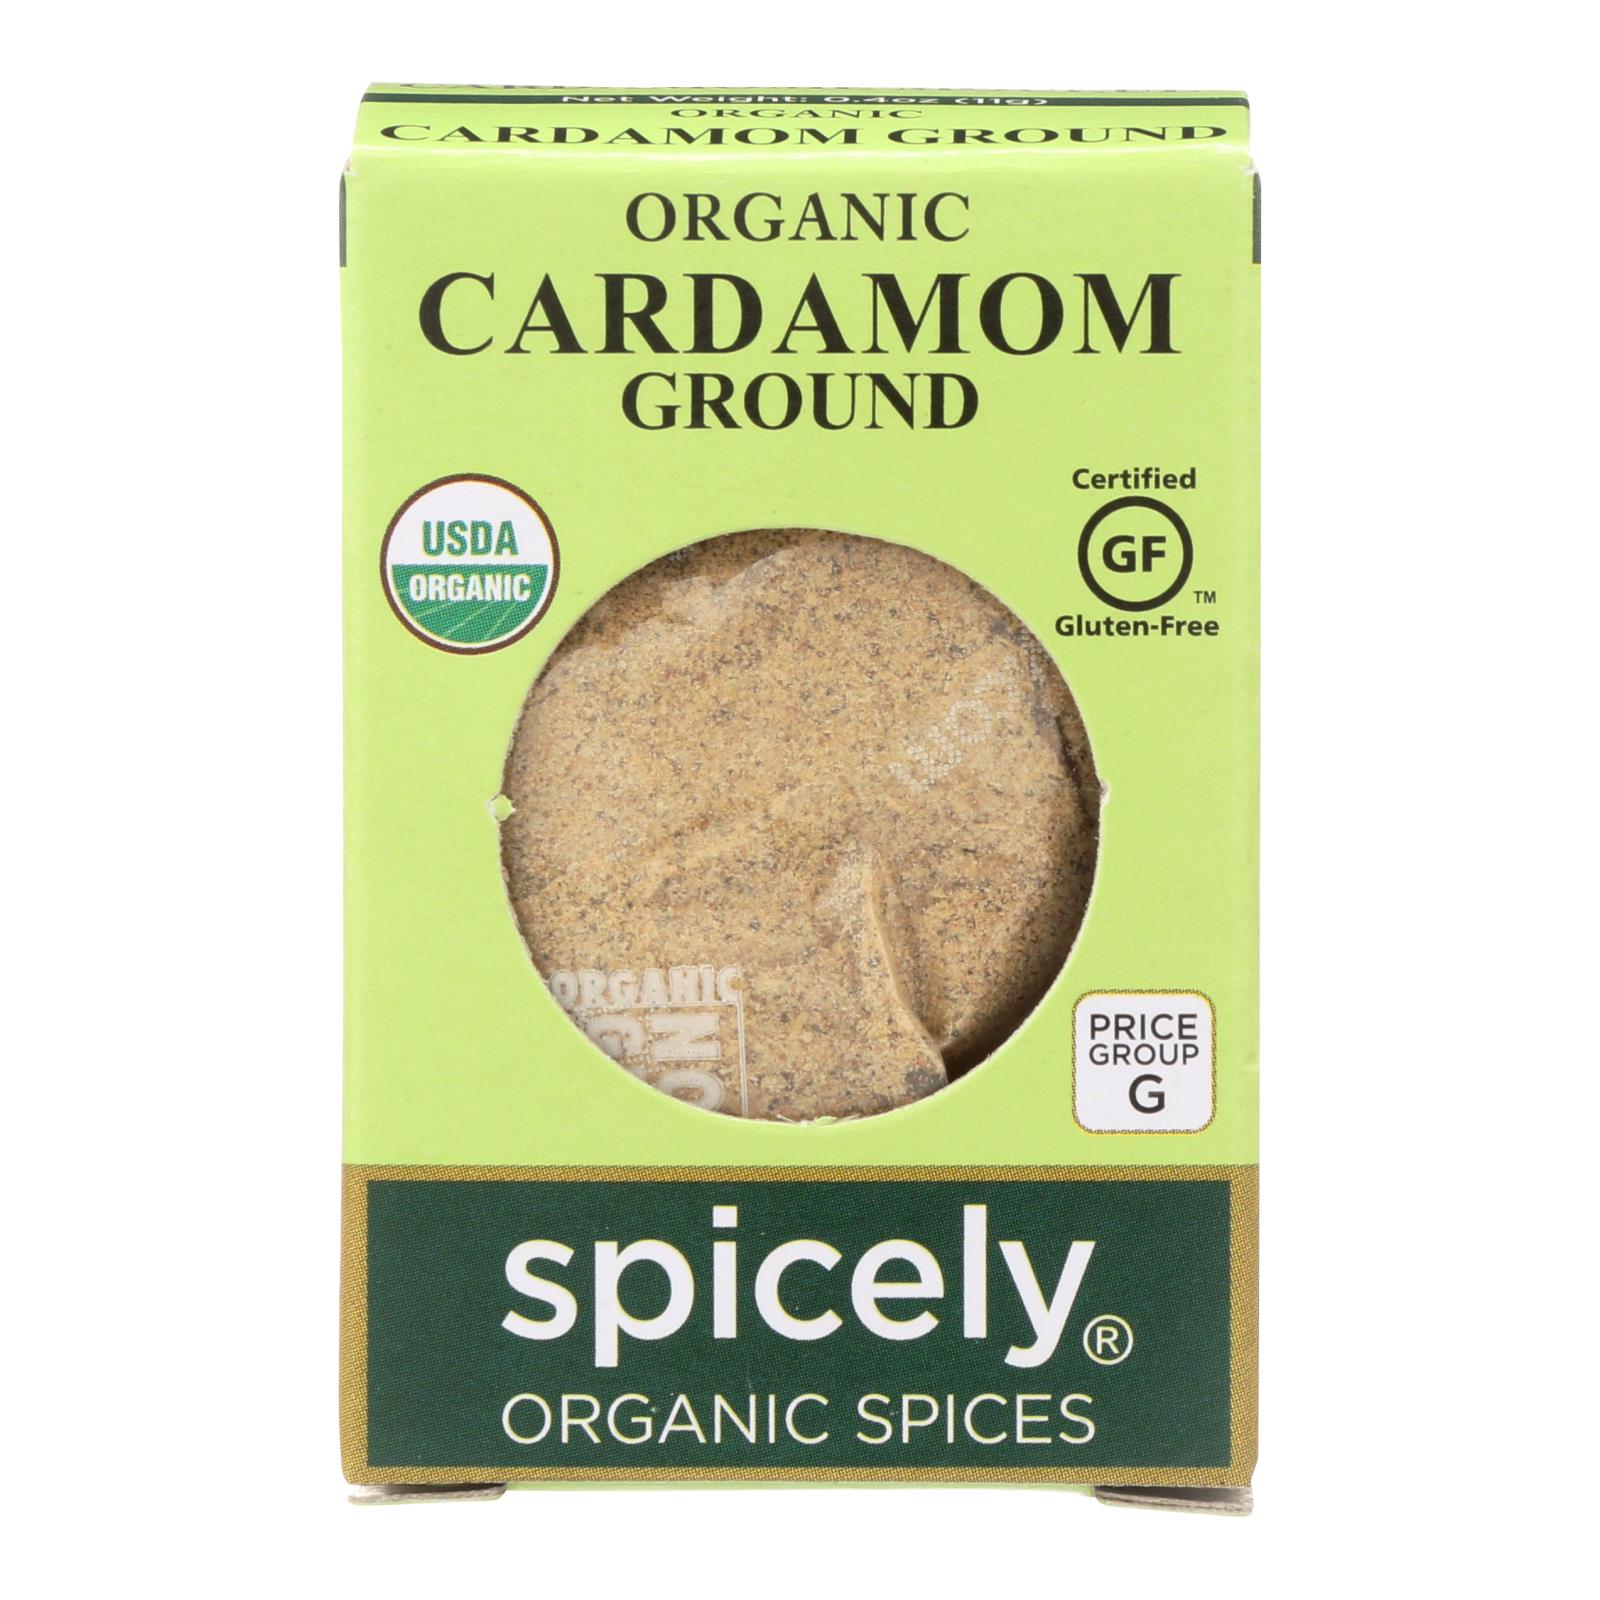 Spicely Organics - Organic Cardamom - Ground - 6개 묶음상품 - 0.4 oz.